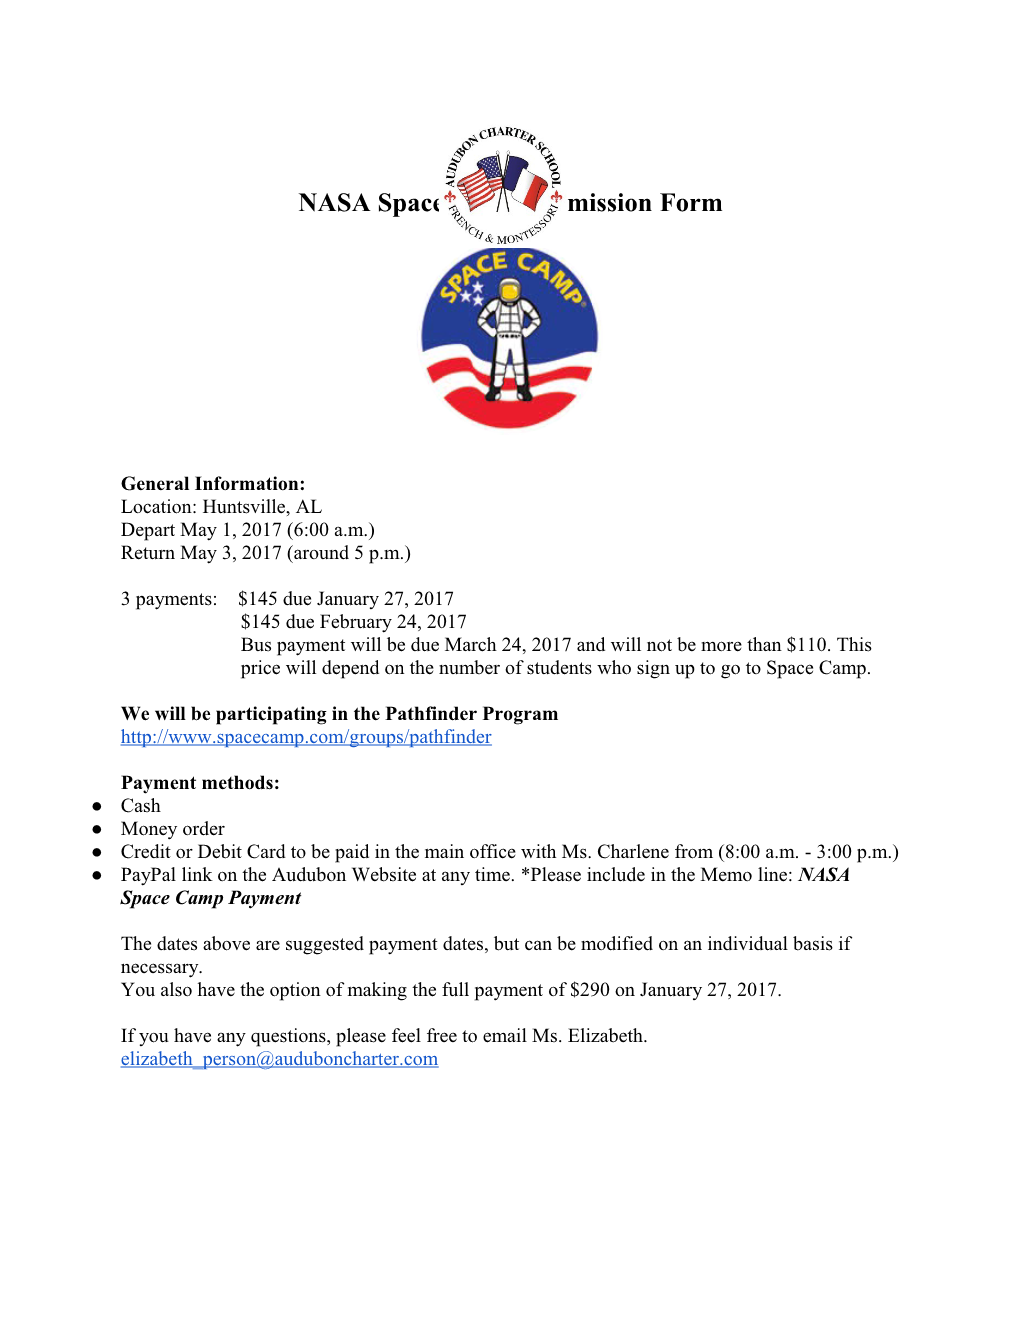 NASA Space Camp Permission Form